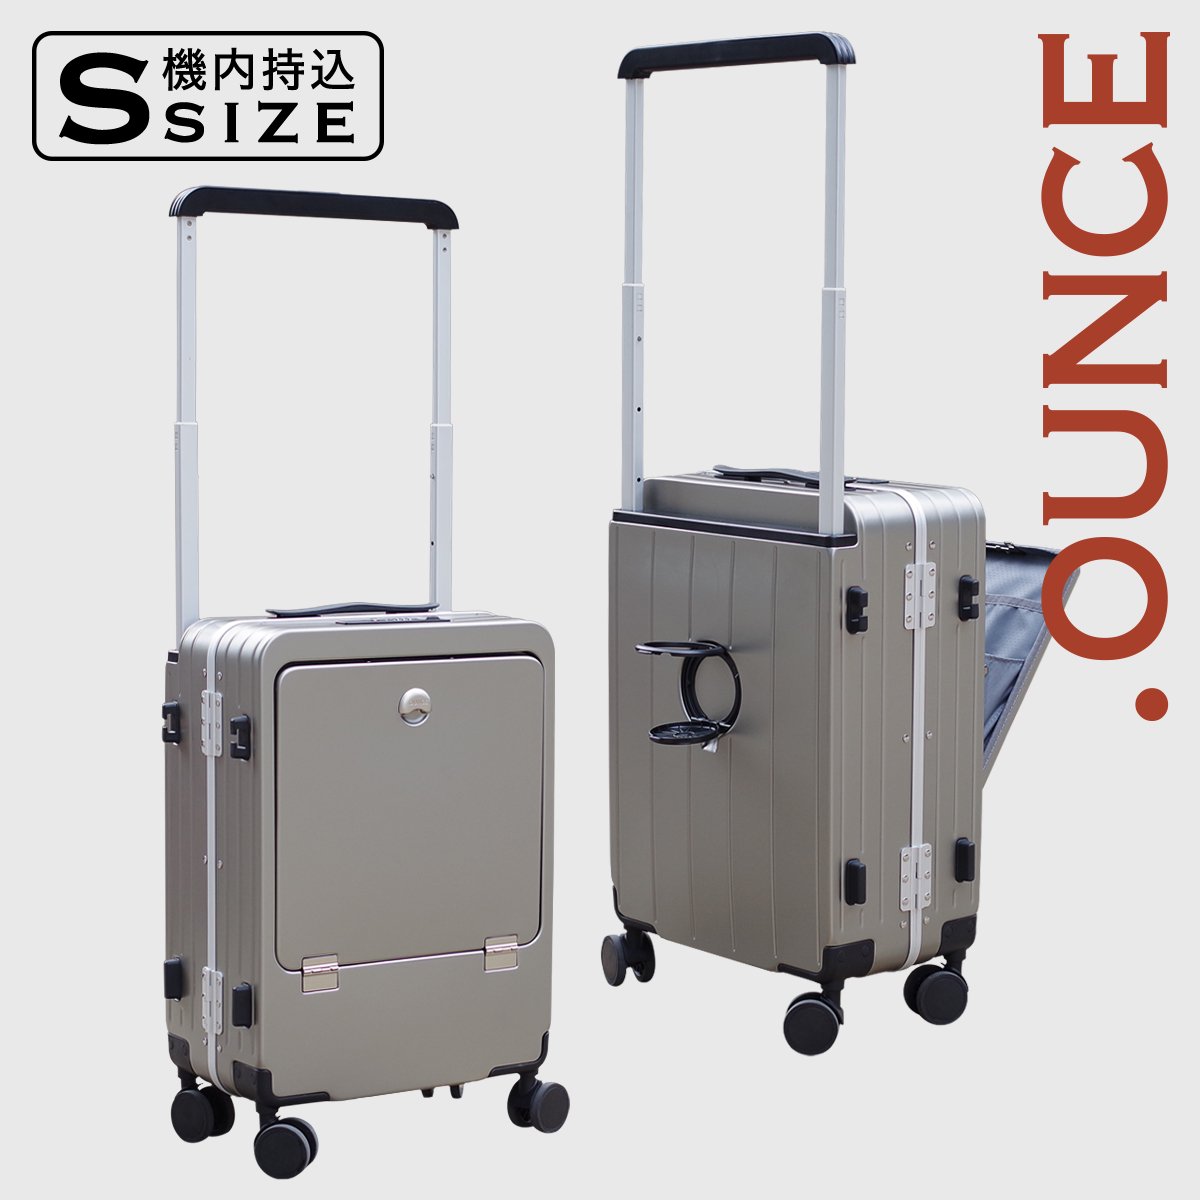 .OUNCE 多機能 スーツケース アルミフレーム 機内持ち込み STYLISH JAPAN 【お得なクーポン配信中】 mfsc2067s